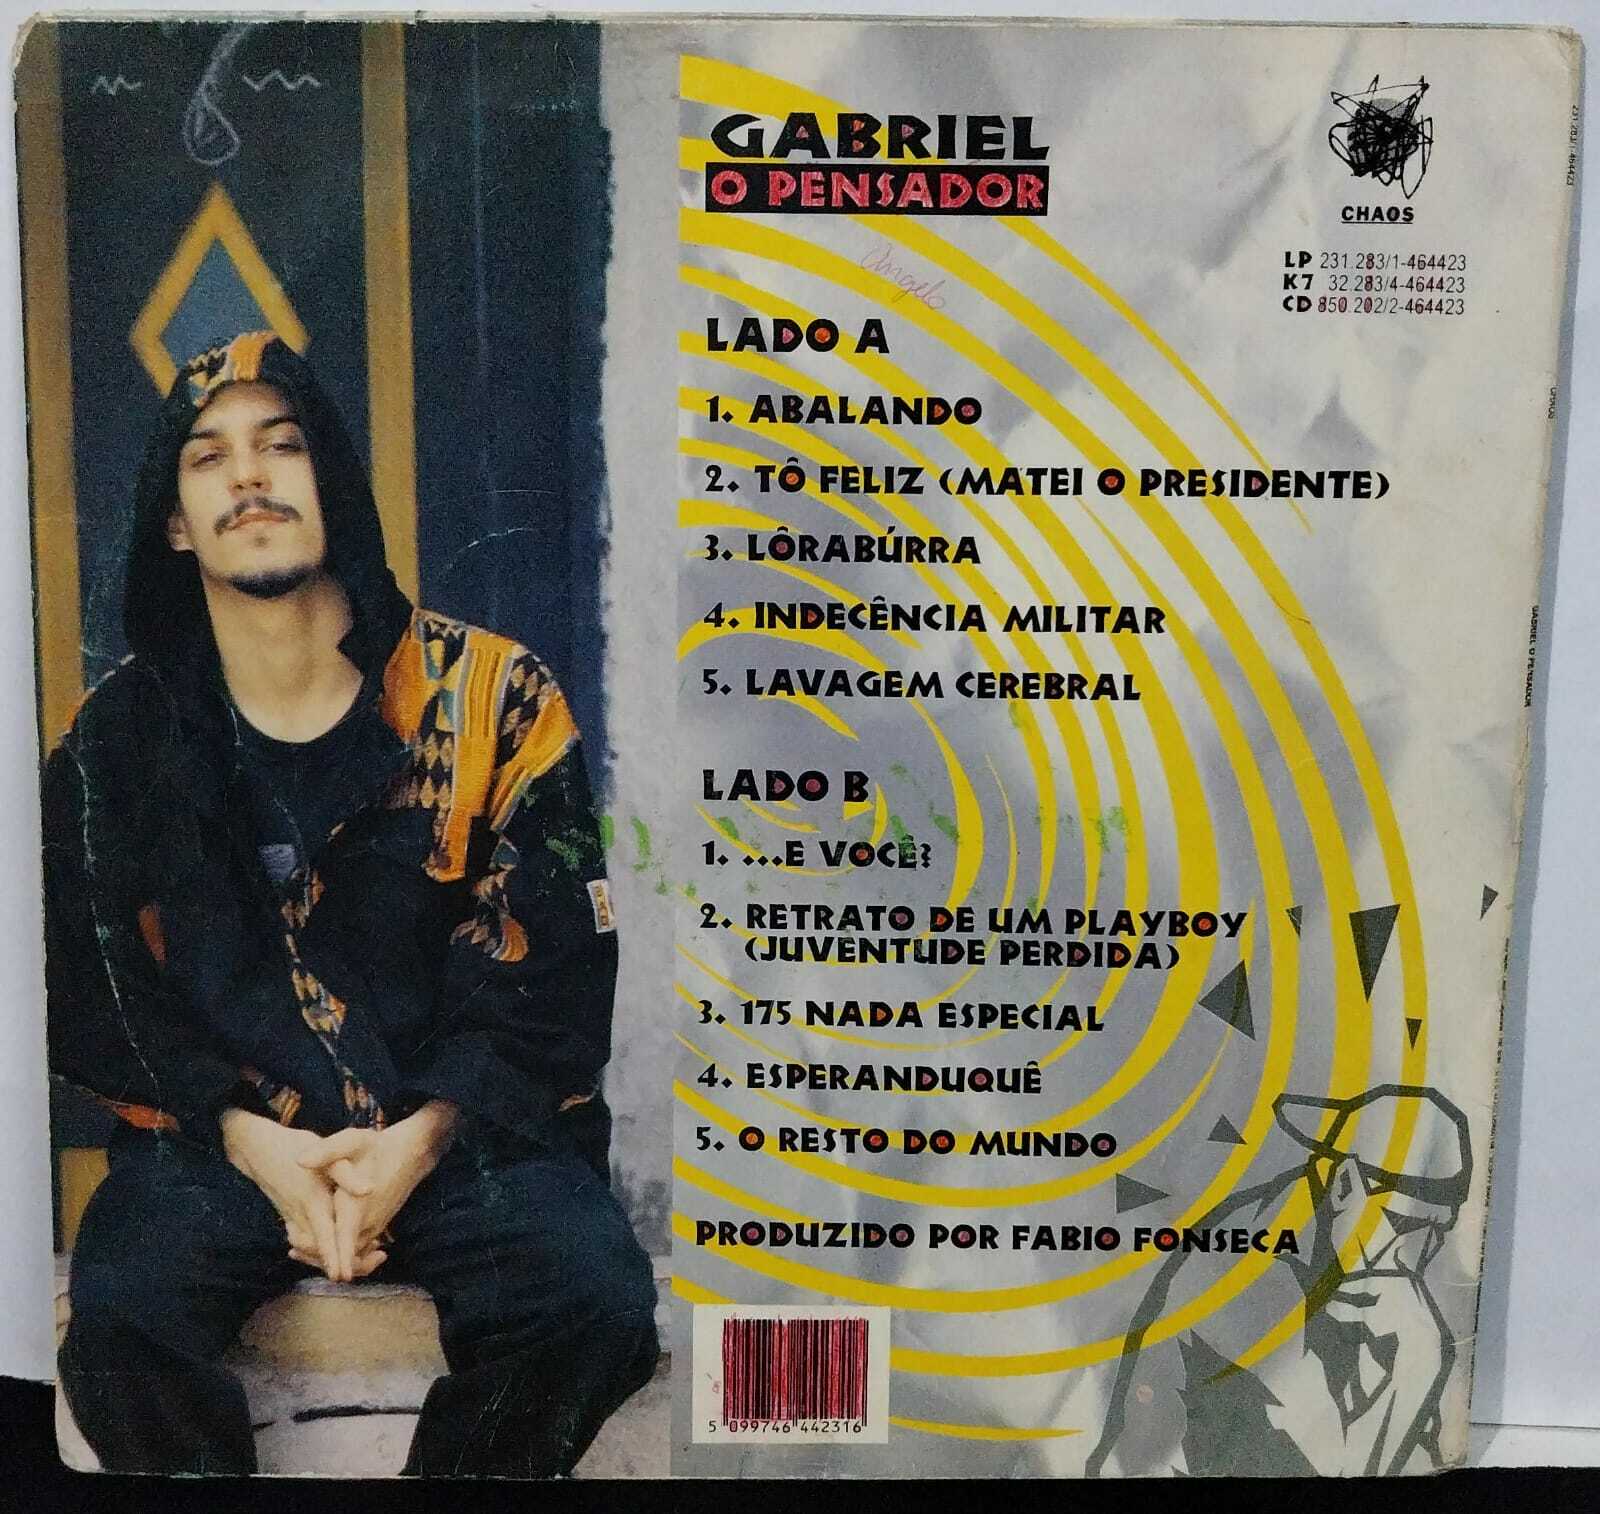 Vinil - Gabriel o Pensador - 1993